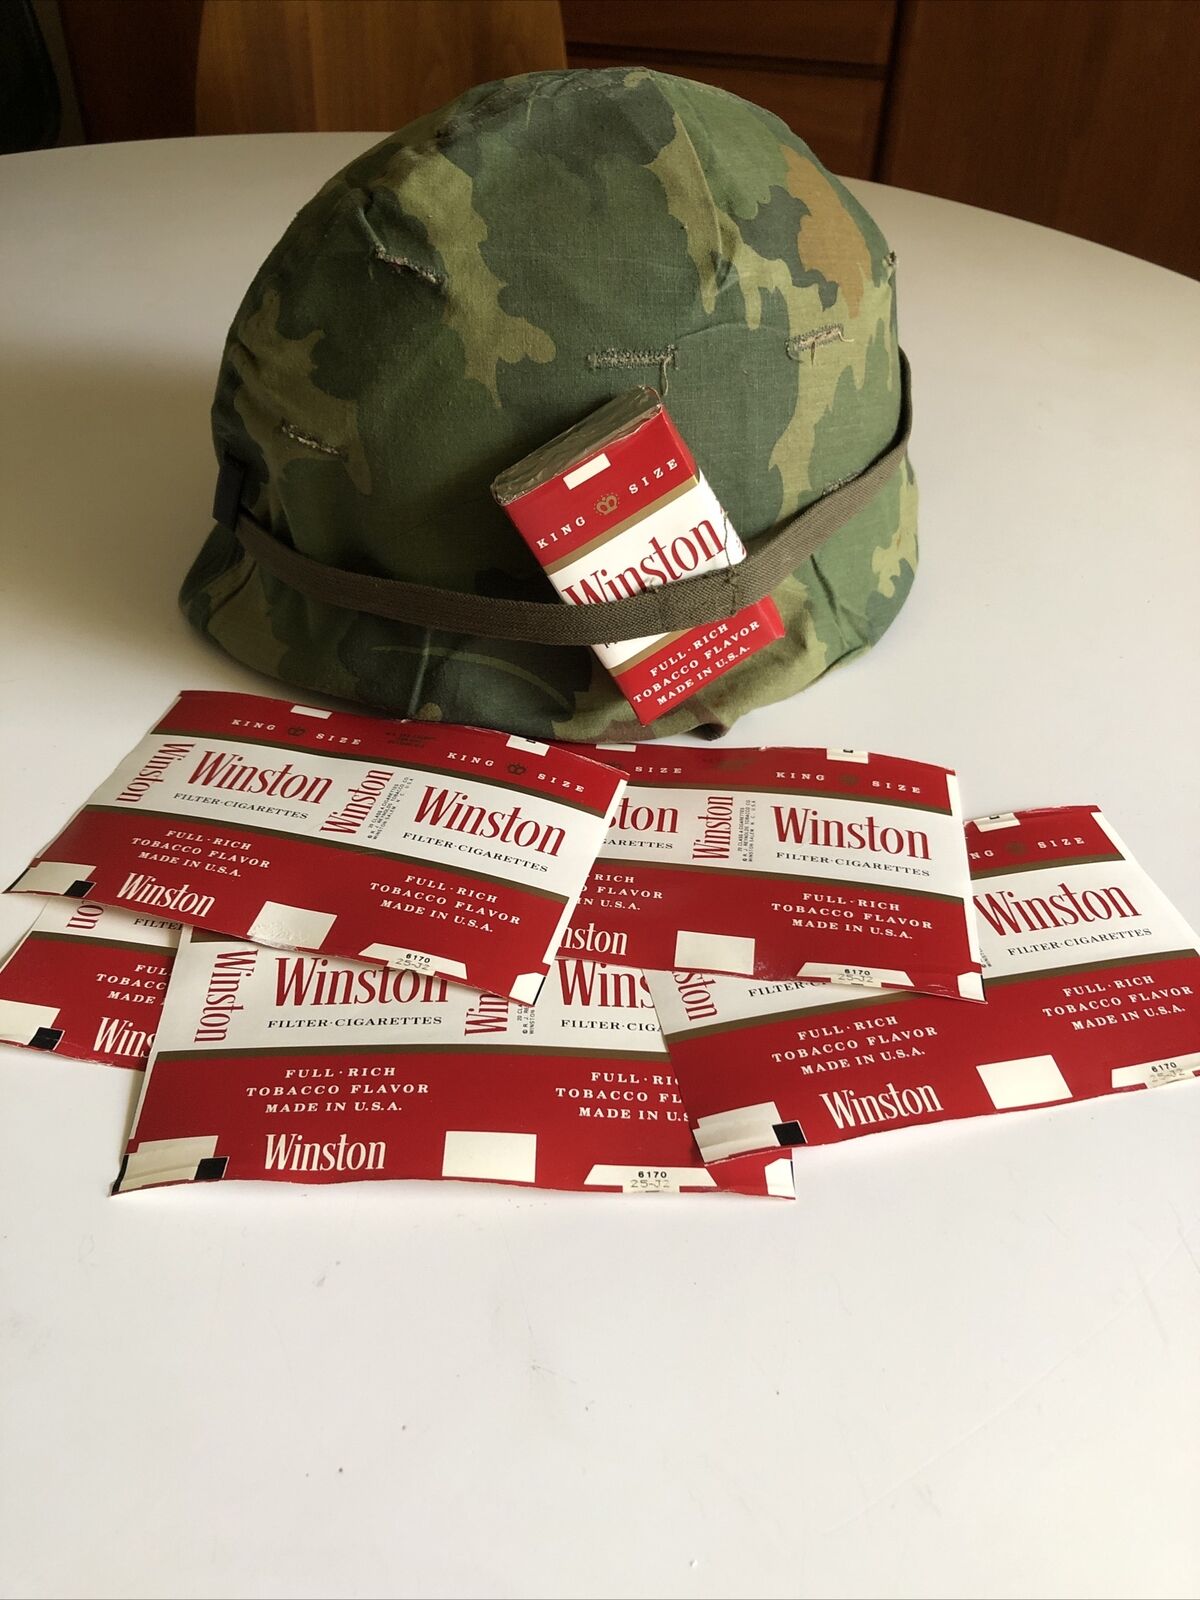 8 ORIGINAL Vietnam War Era 60’s WINSTON MILITARY Cigarette Pack Labels M1 Helmet